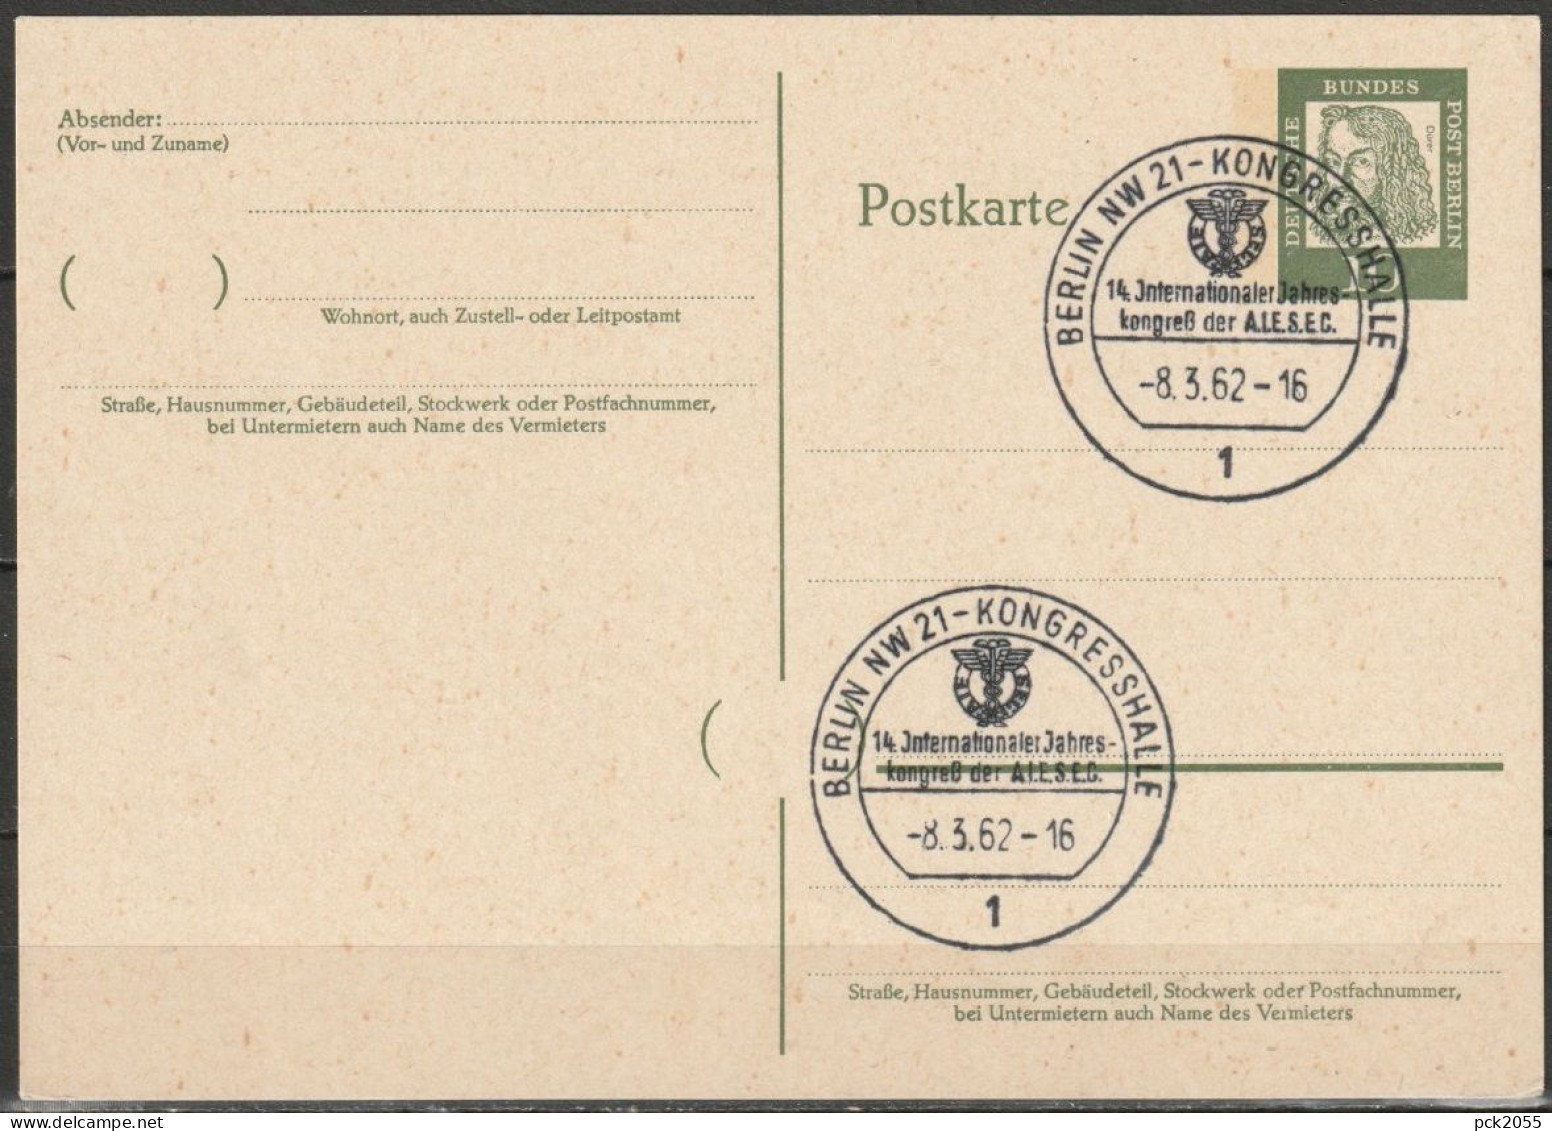 Berlin Ganzsache 1961 Mi.-Nr. P 51 Sonderstempel BERLIN-Kongresshalle 8.3.62  ( PK 222 ) - Postcards - Used